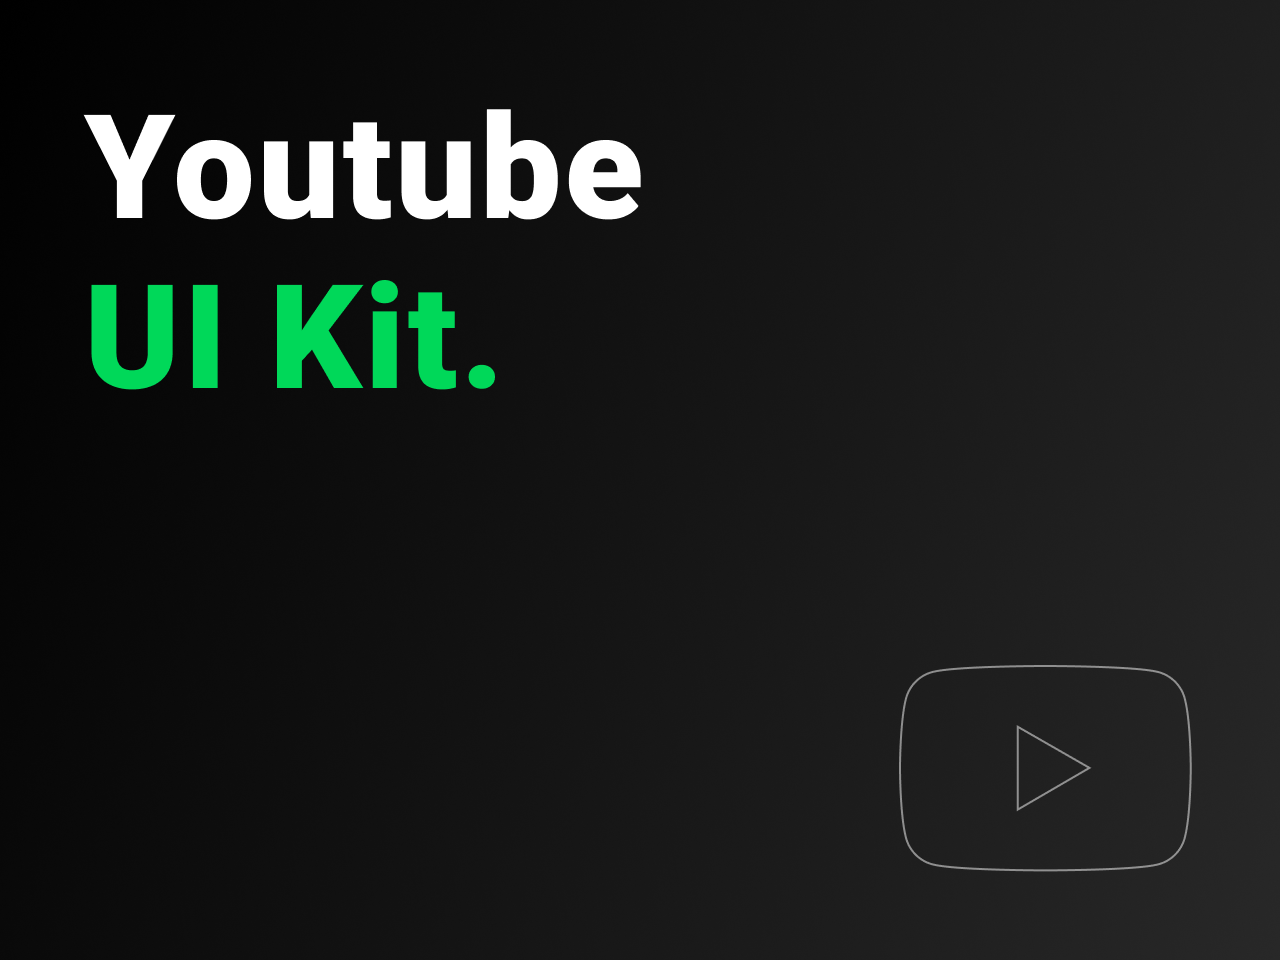 YouTube视频App UI Kit素材下载 - 适用于YouTube视频应用的界面设计，包含多种UI组件和元素 figma格式-UI/UX-到位啦UI